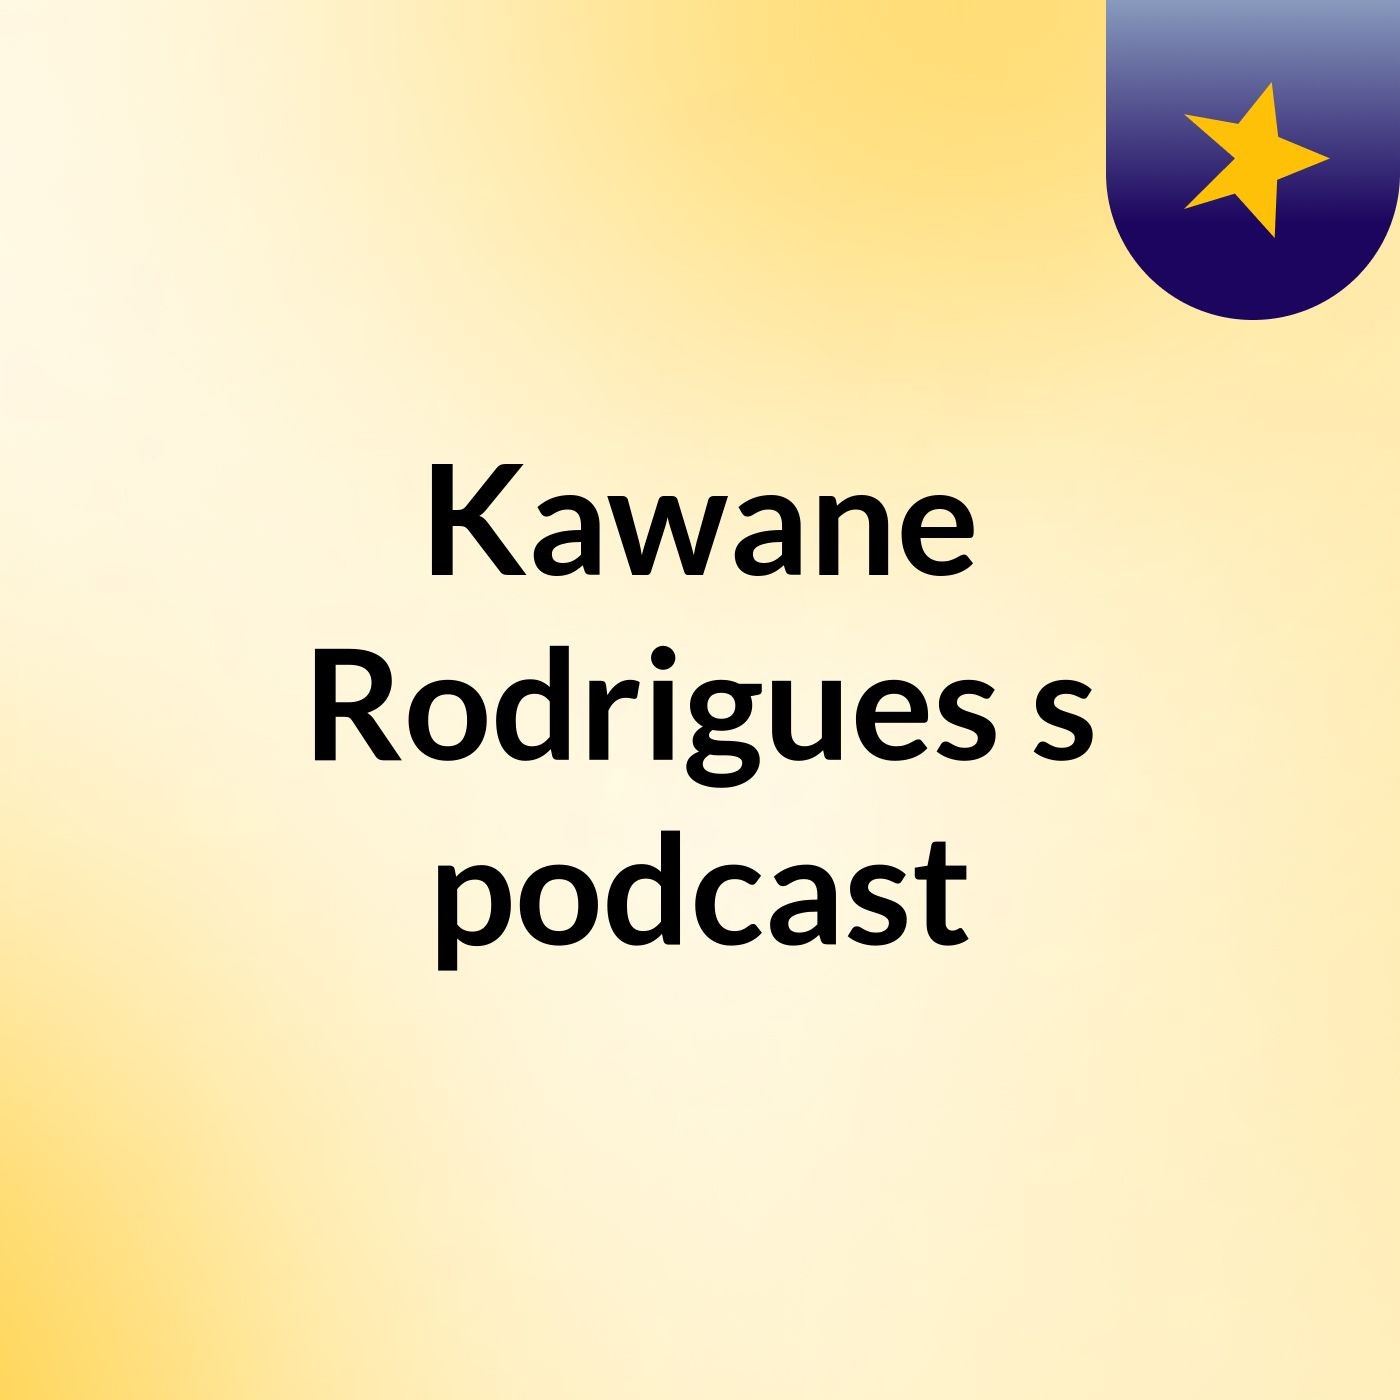 Kawane Rodrigues's podcast